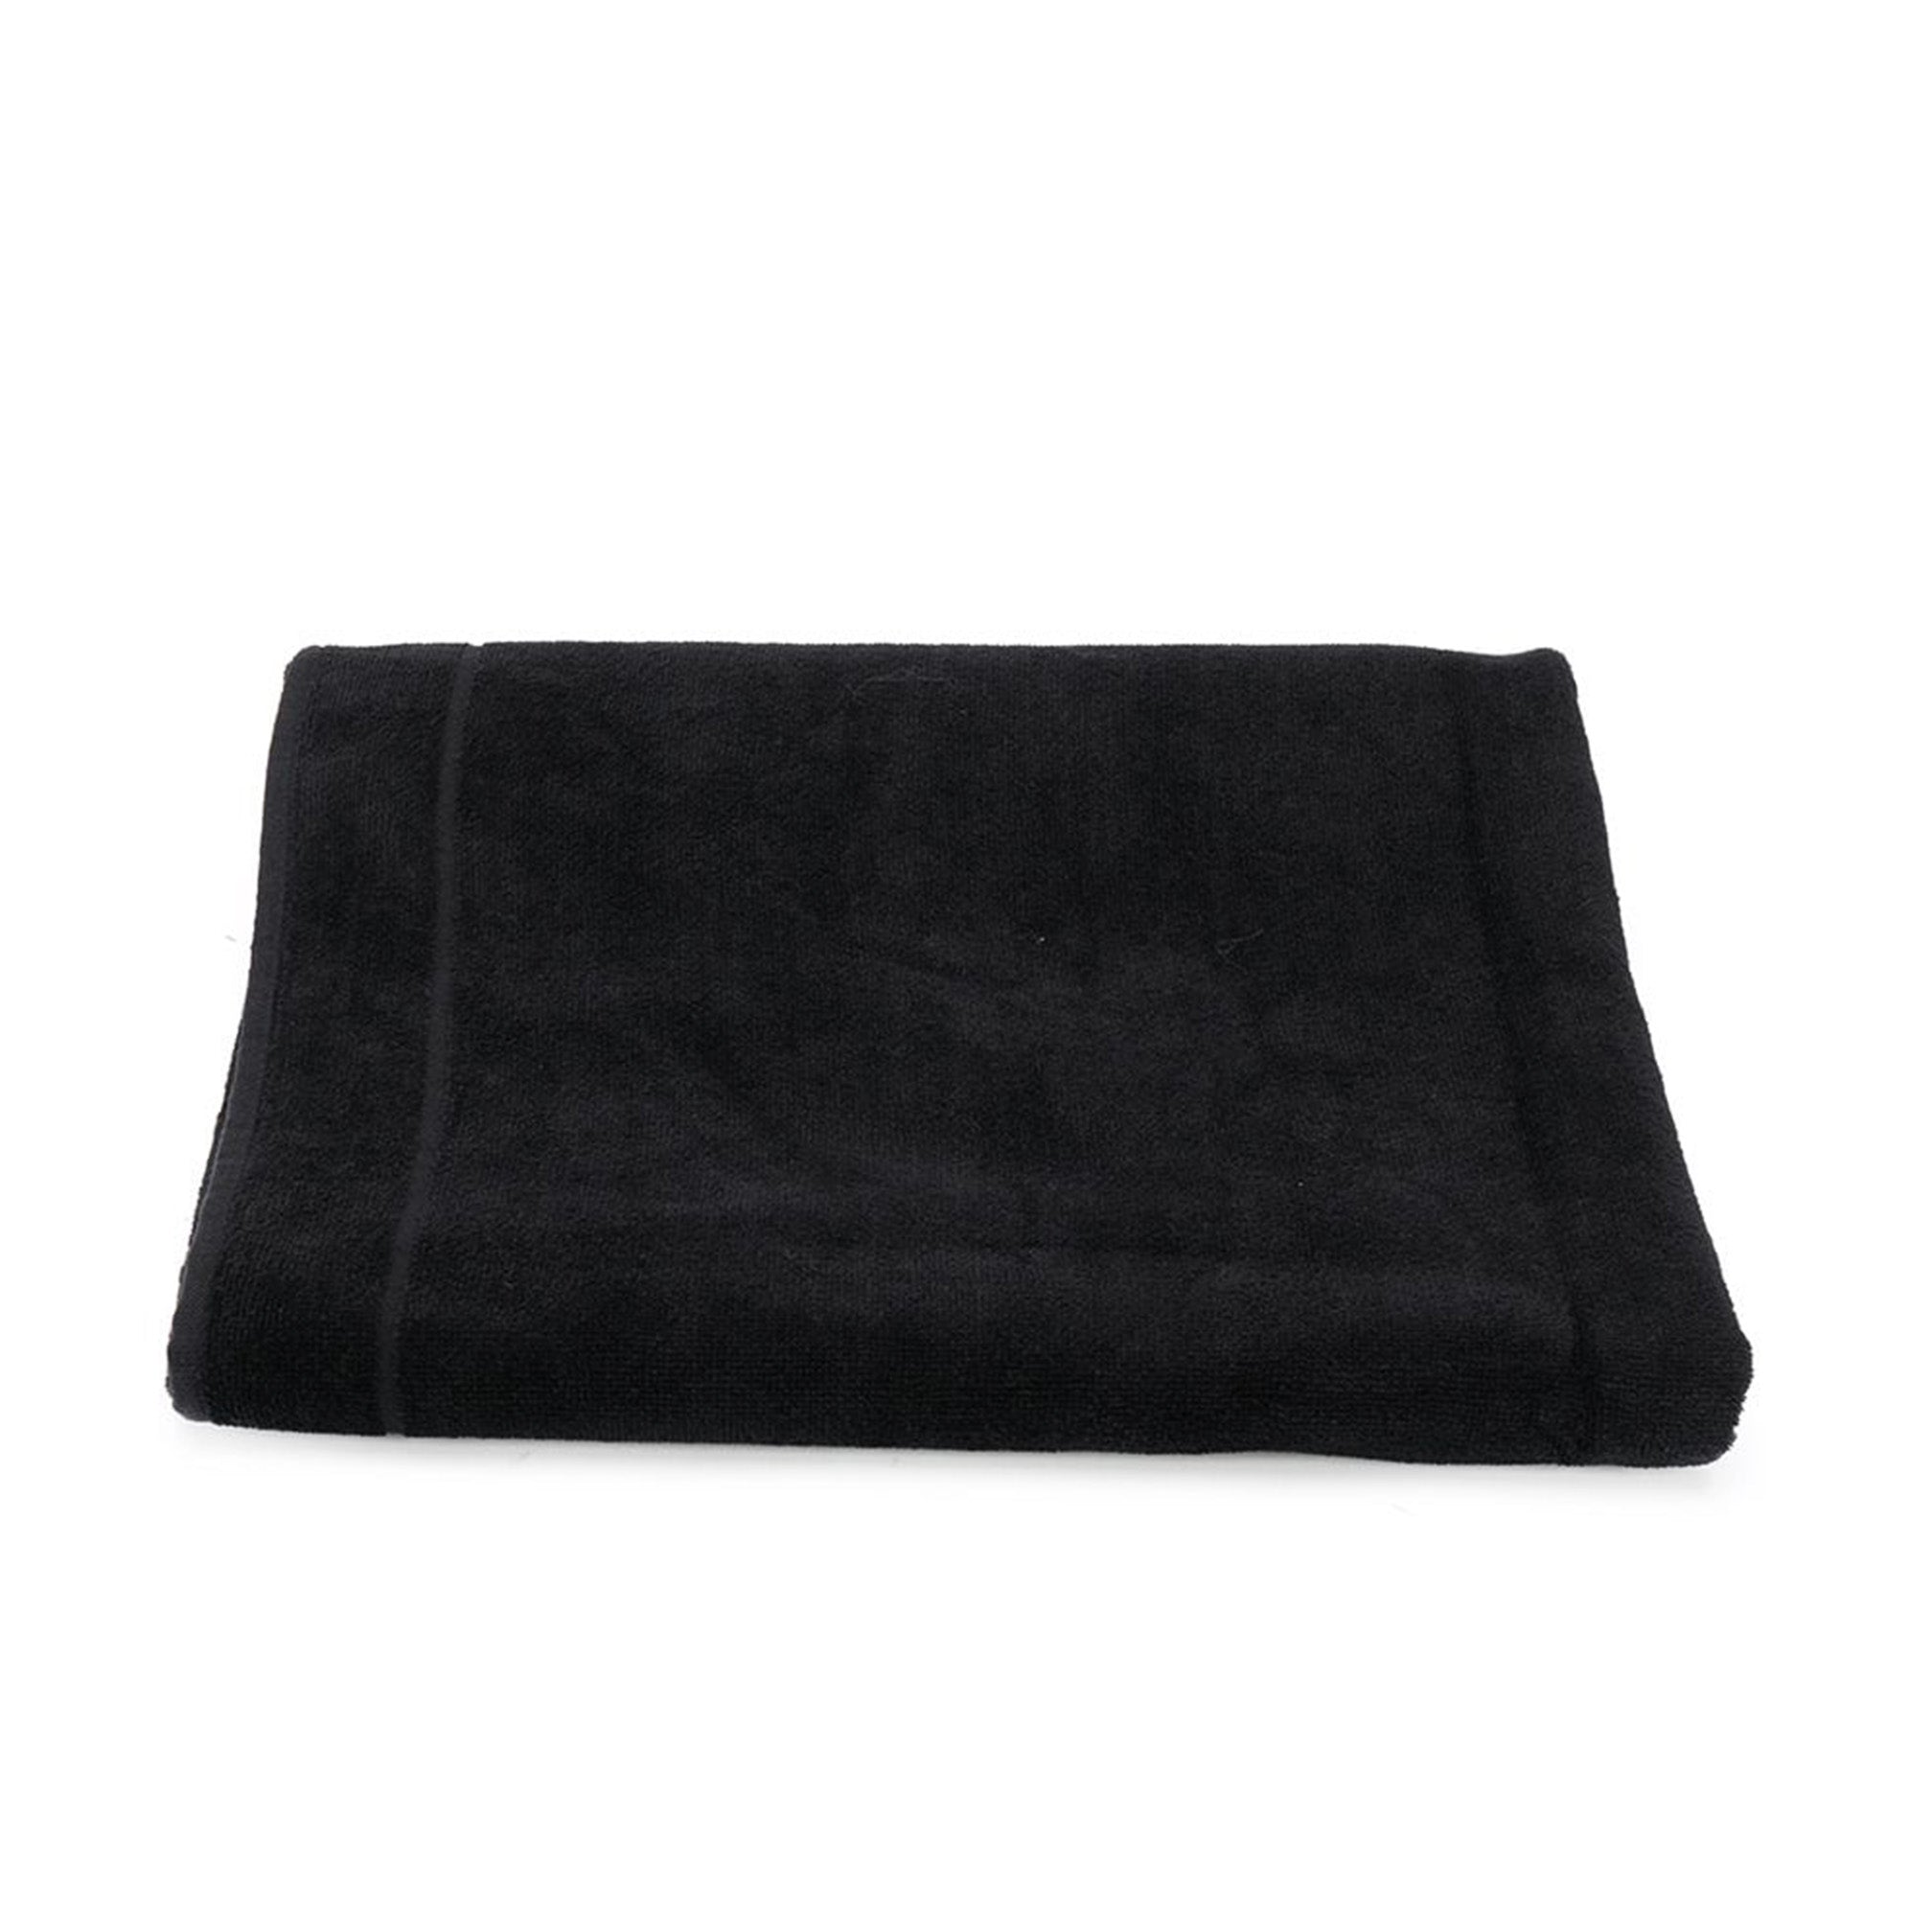 Balmain Black Towel